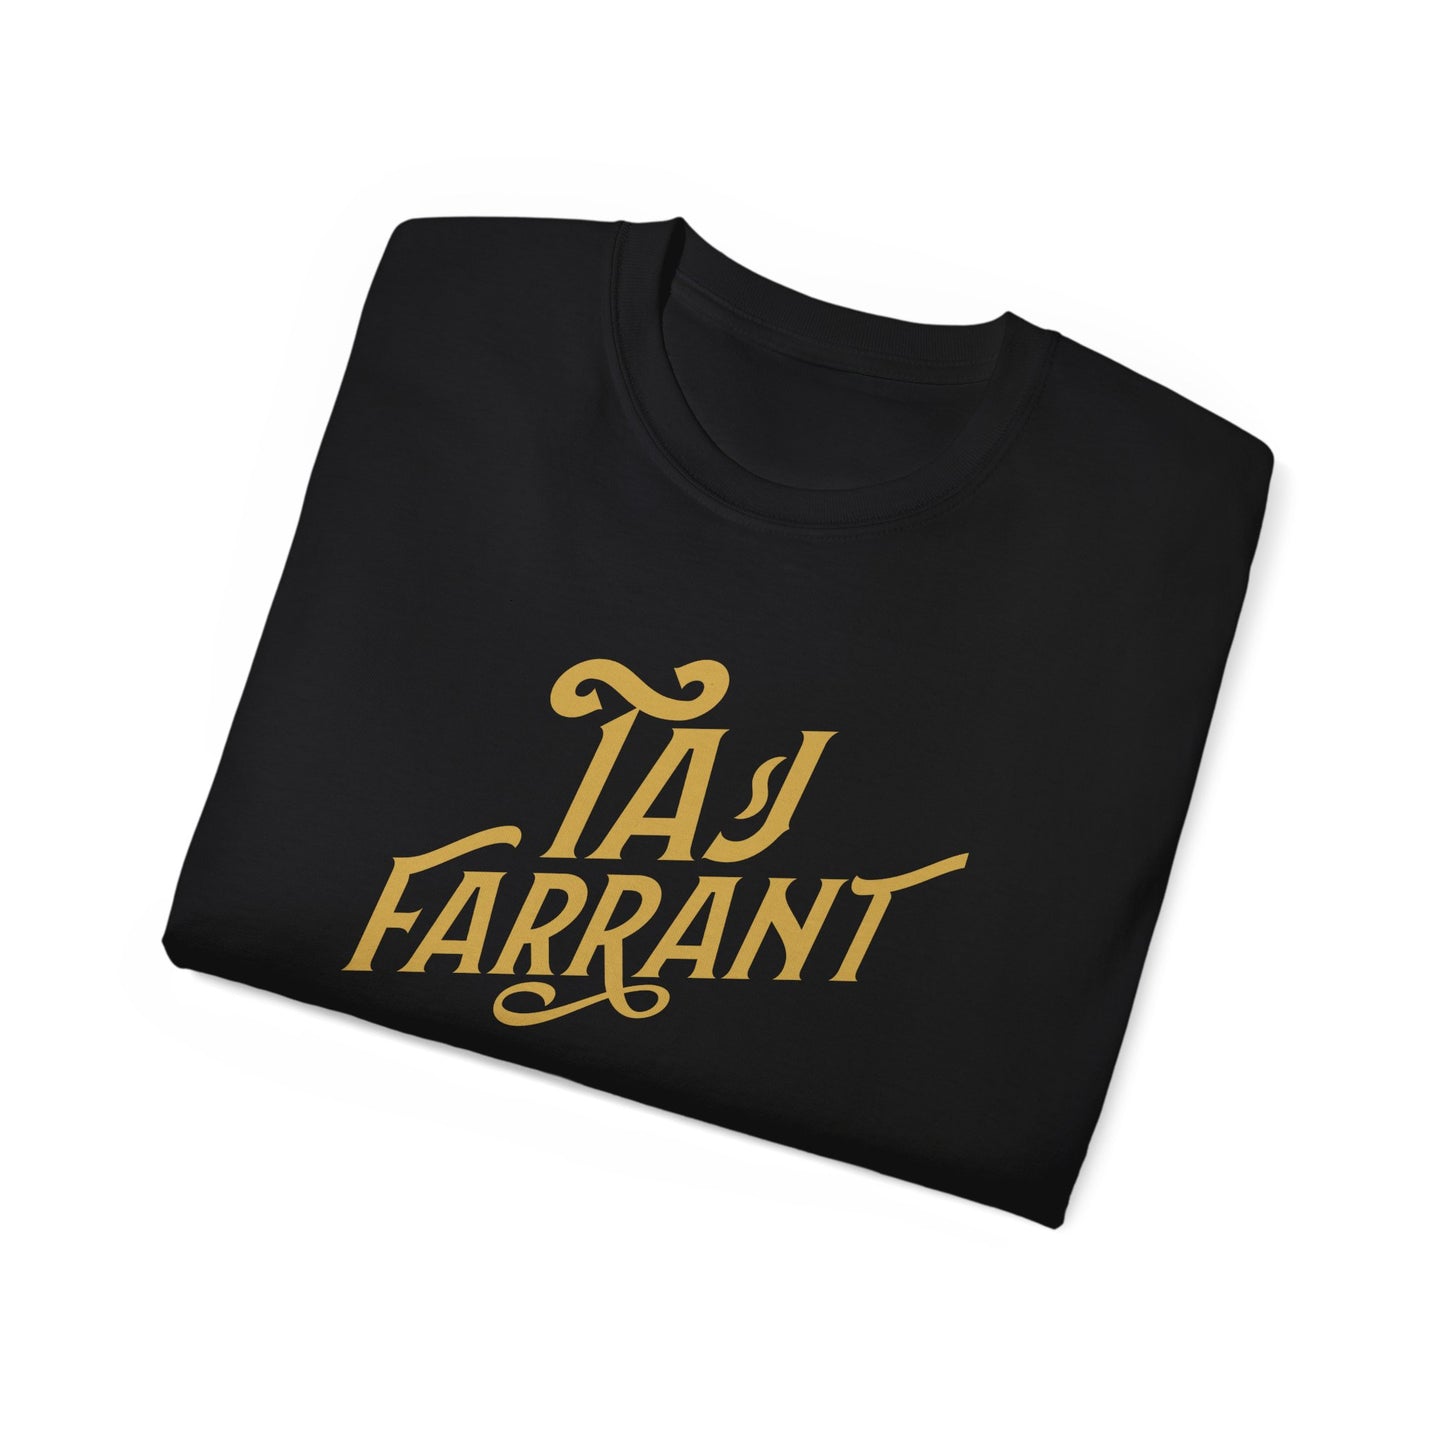 Taj Farrant Shirt (Mens)